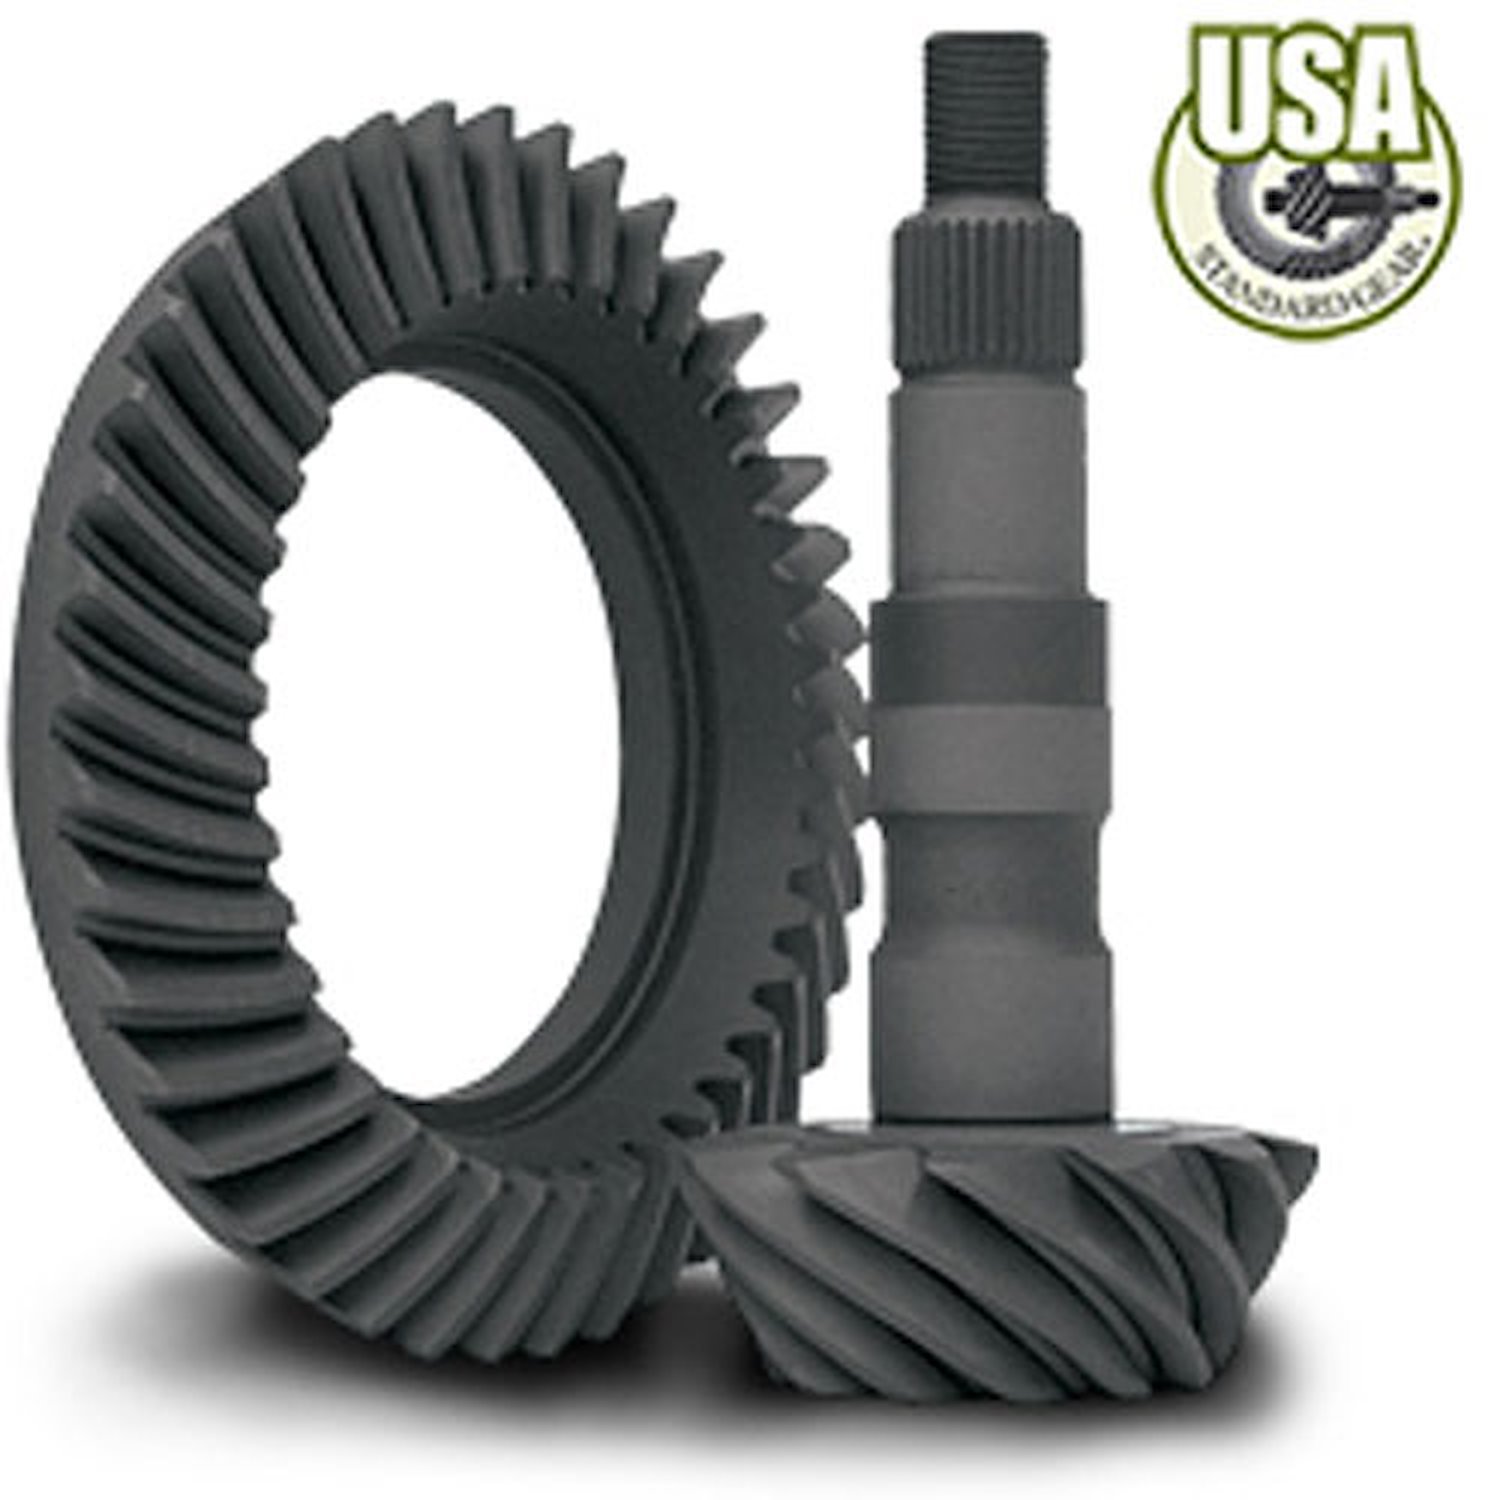 USA Standard Ring & Pinion Gear Set GM 8.5", 8.6"